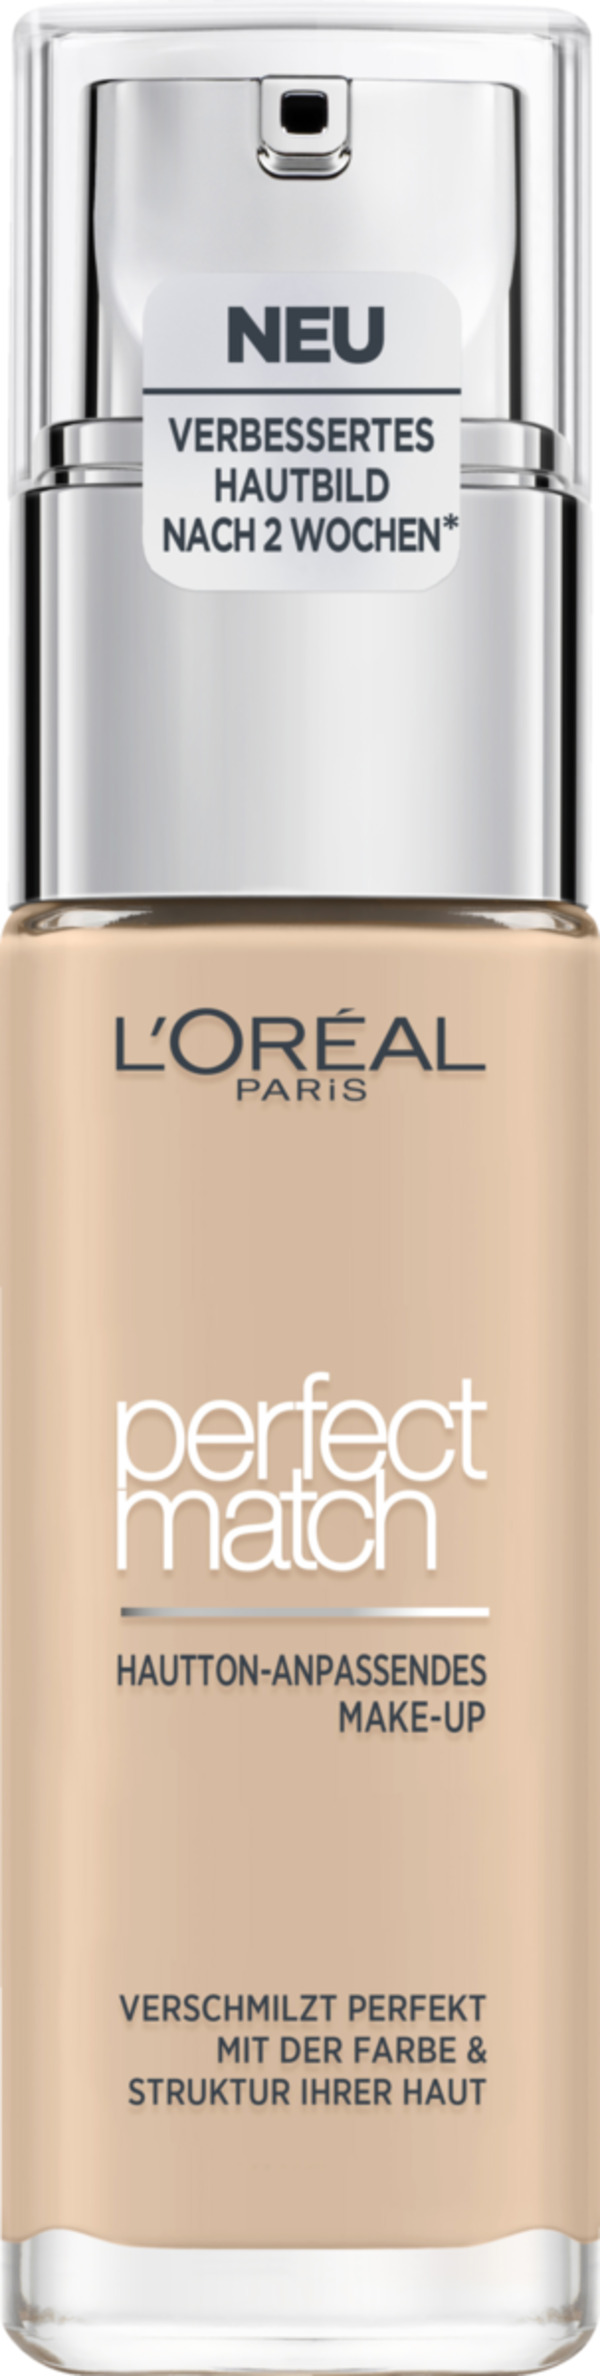 Bild 1 von L’Oréal Paris MakeUp flüssig Perfect Match 1.N ivory 36.63 EUR/100 ml